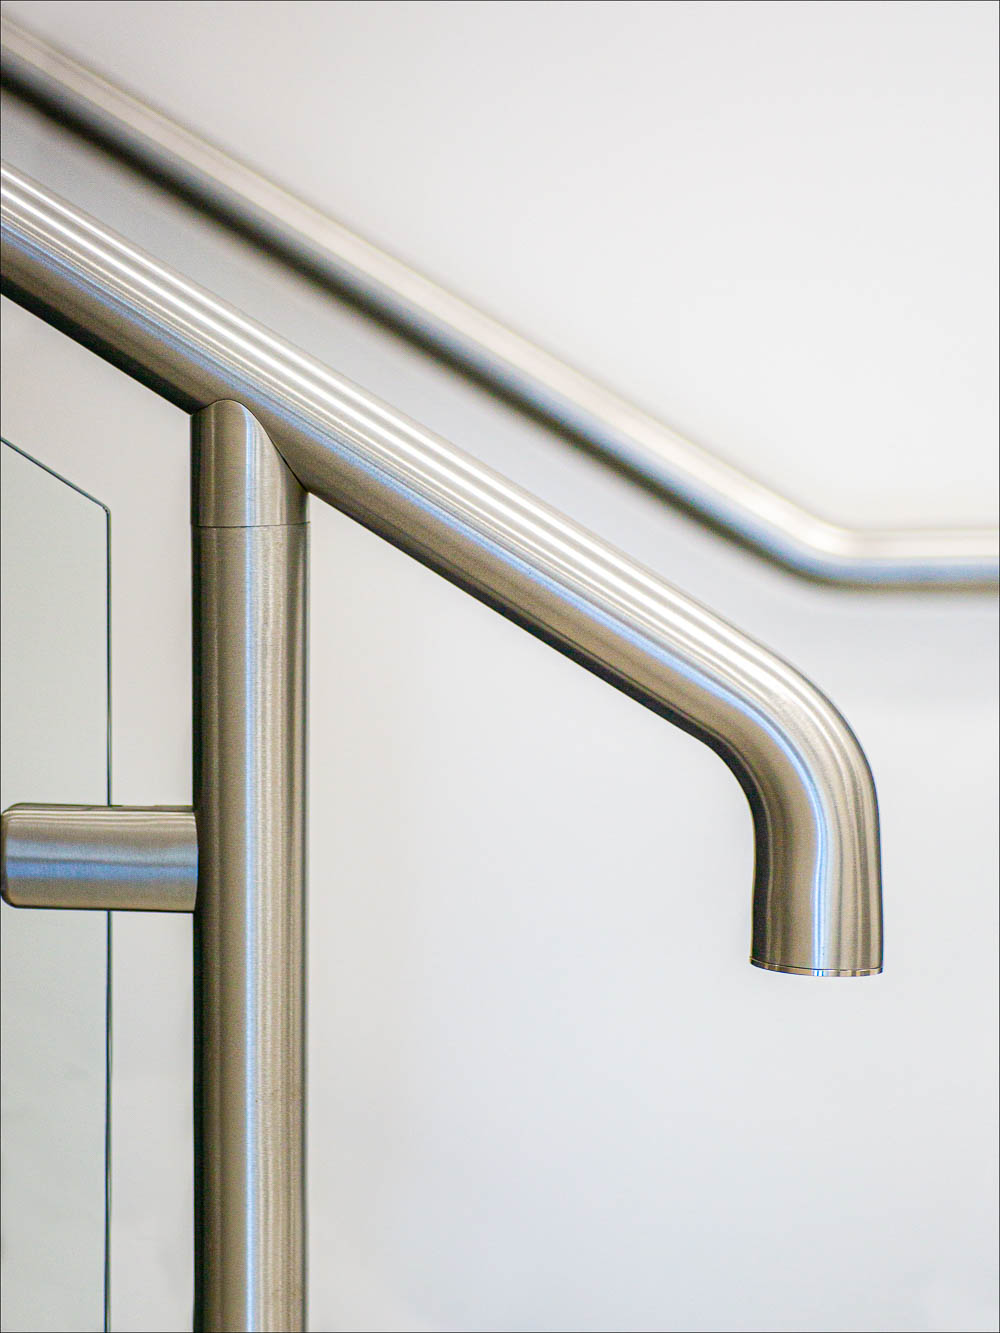 Handrail by David Pearson ARPS